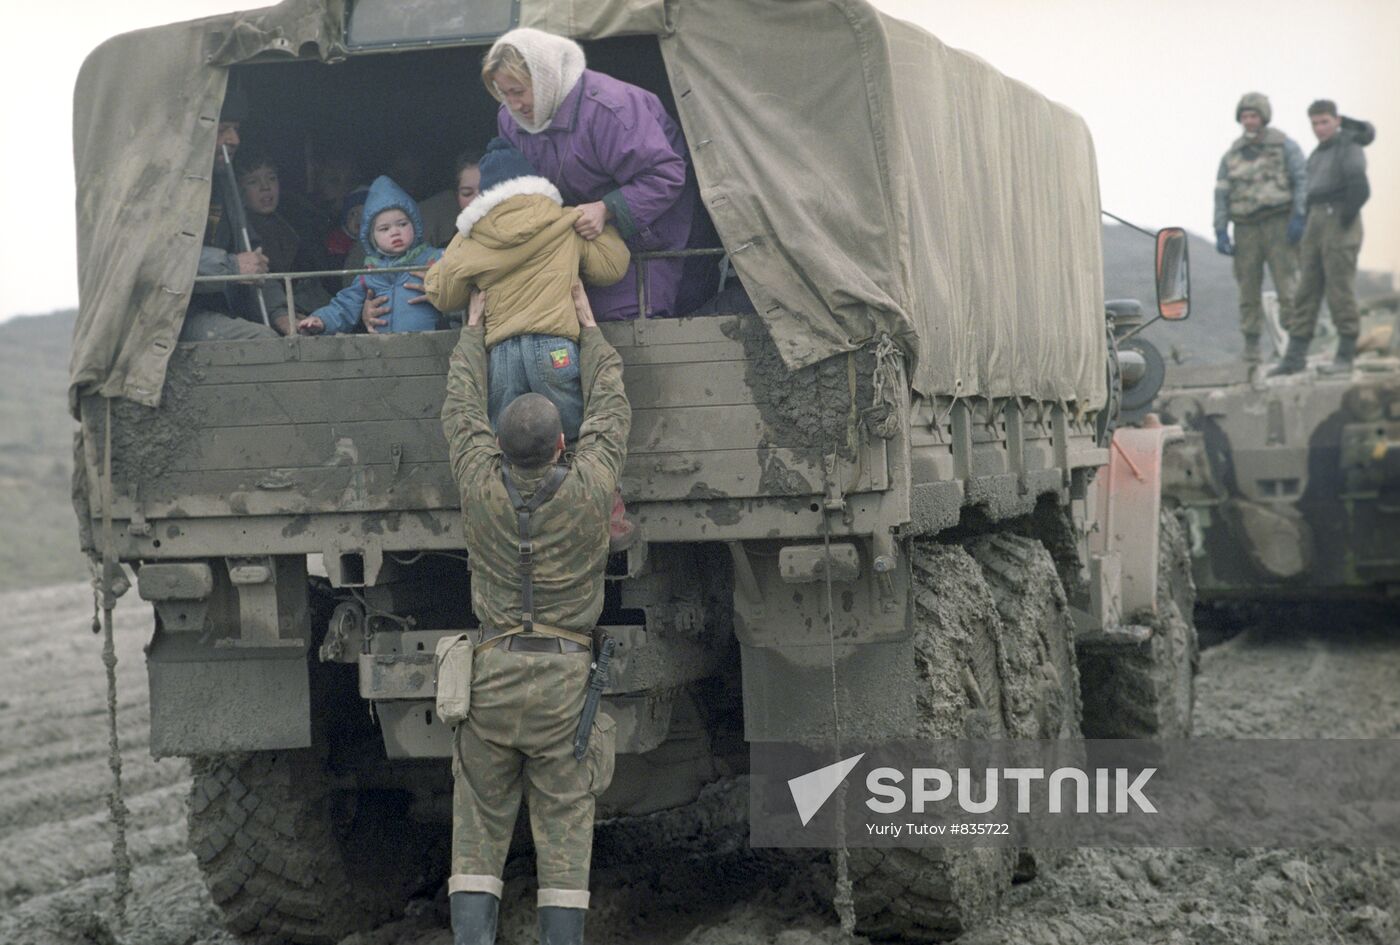 Evacuation of Grozny population